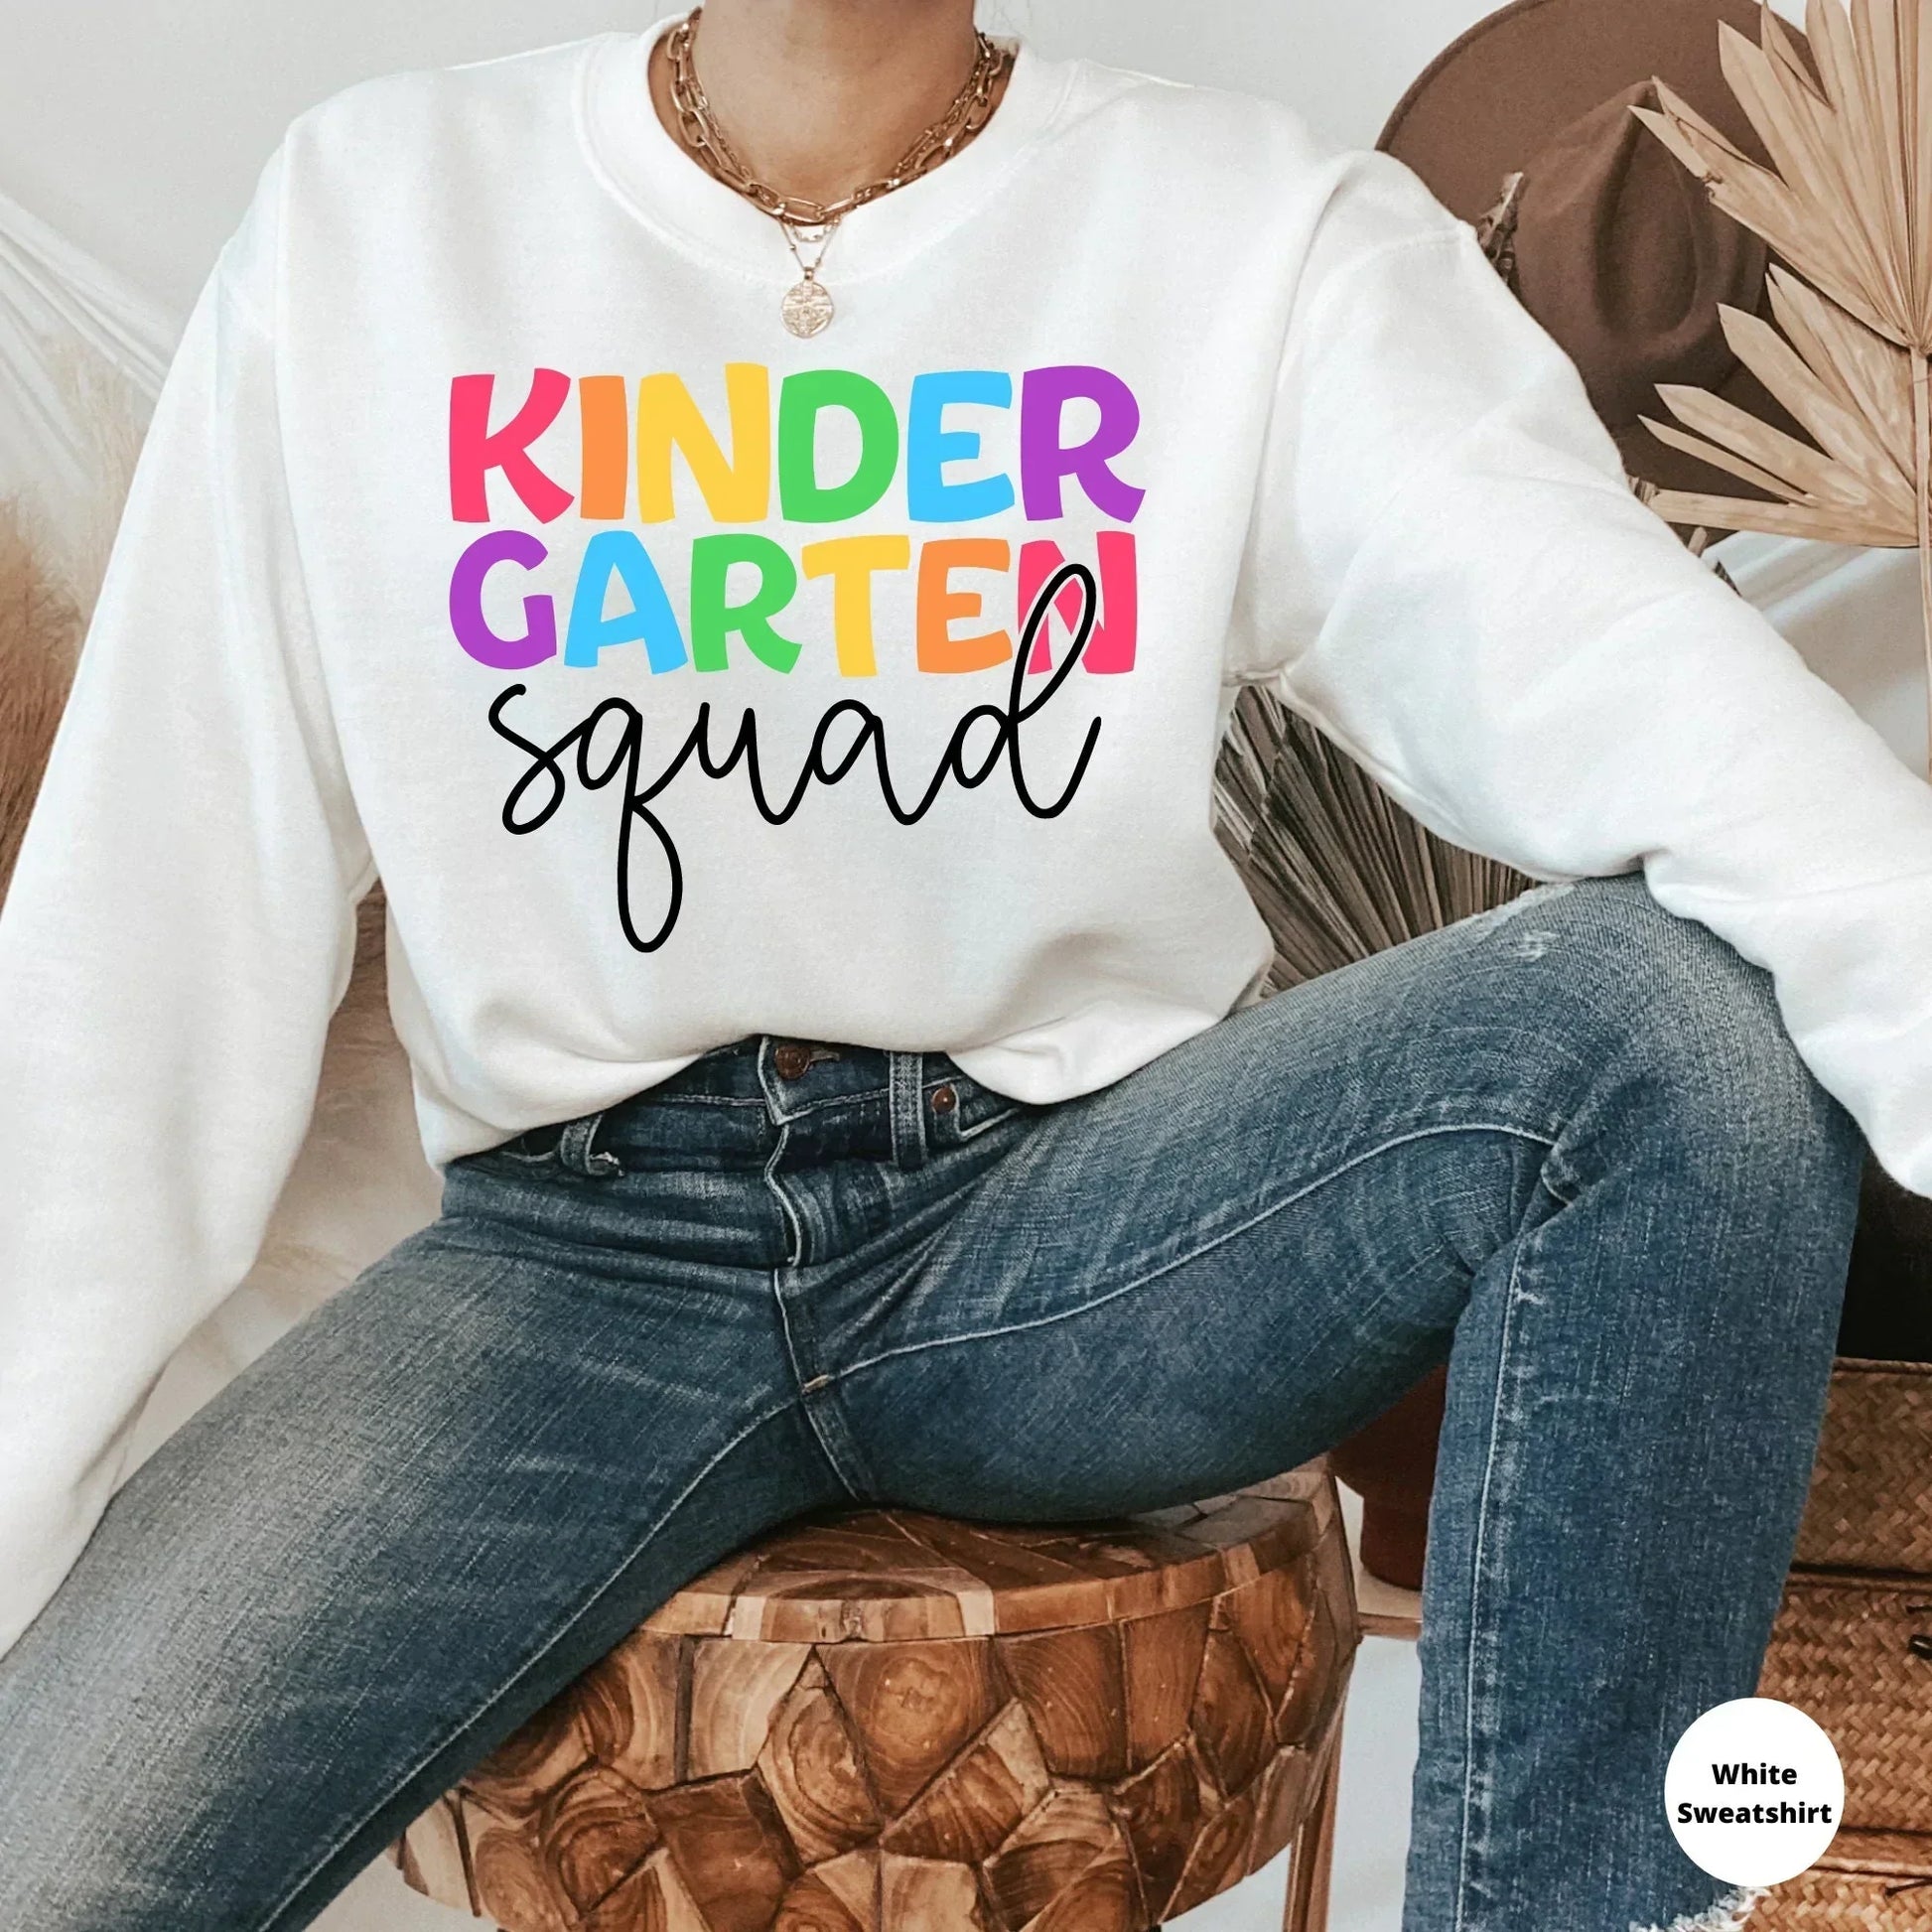 Kindergarten Squad Shirt for Teacher Teams